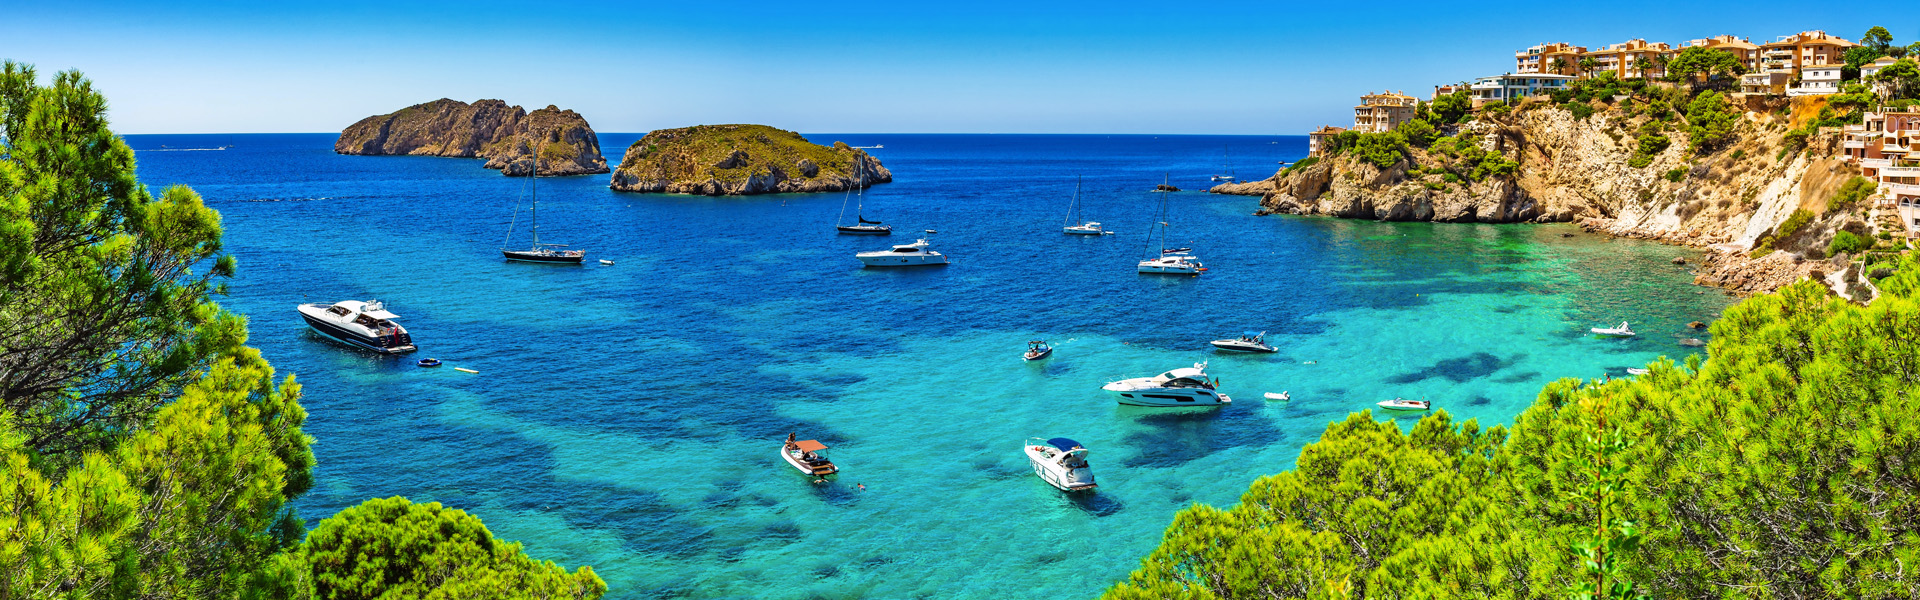 Spain Majorca Mediterranean Sea Panorama Coast Bay with Boats at